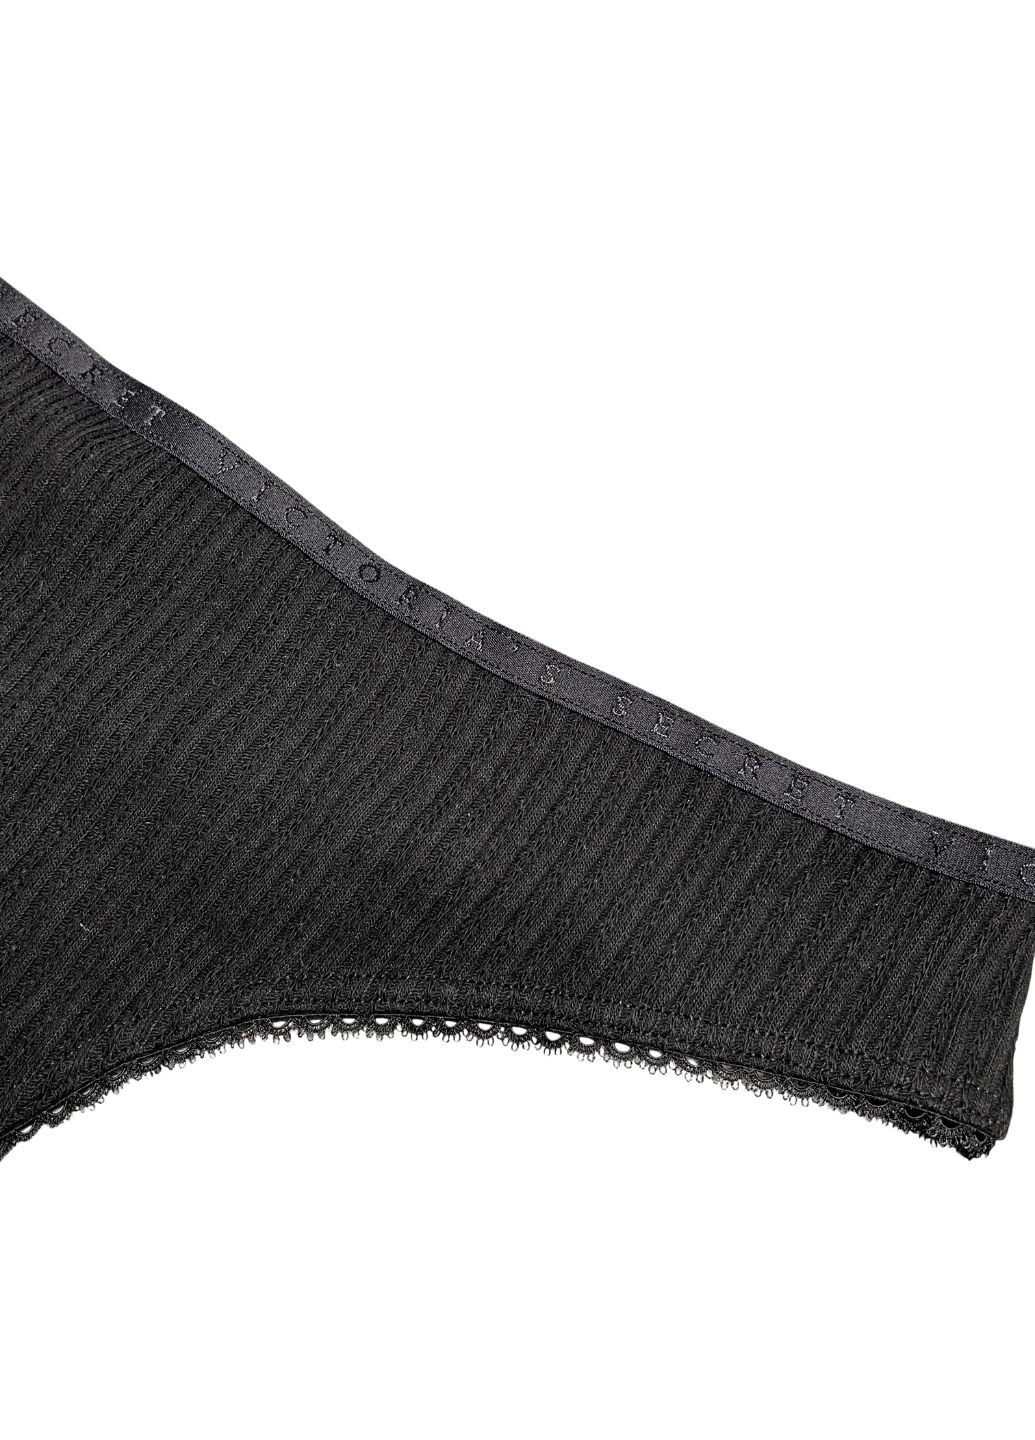 Трусики с украшением в виде серца на поясе сзади Victoria's Secret cotton & rhinestone detail thong panty (267723017)